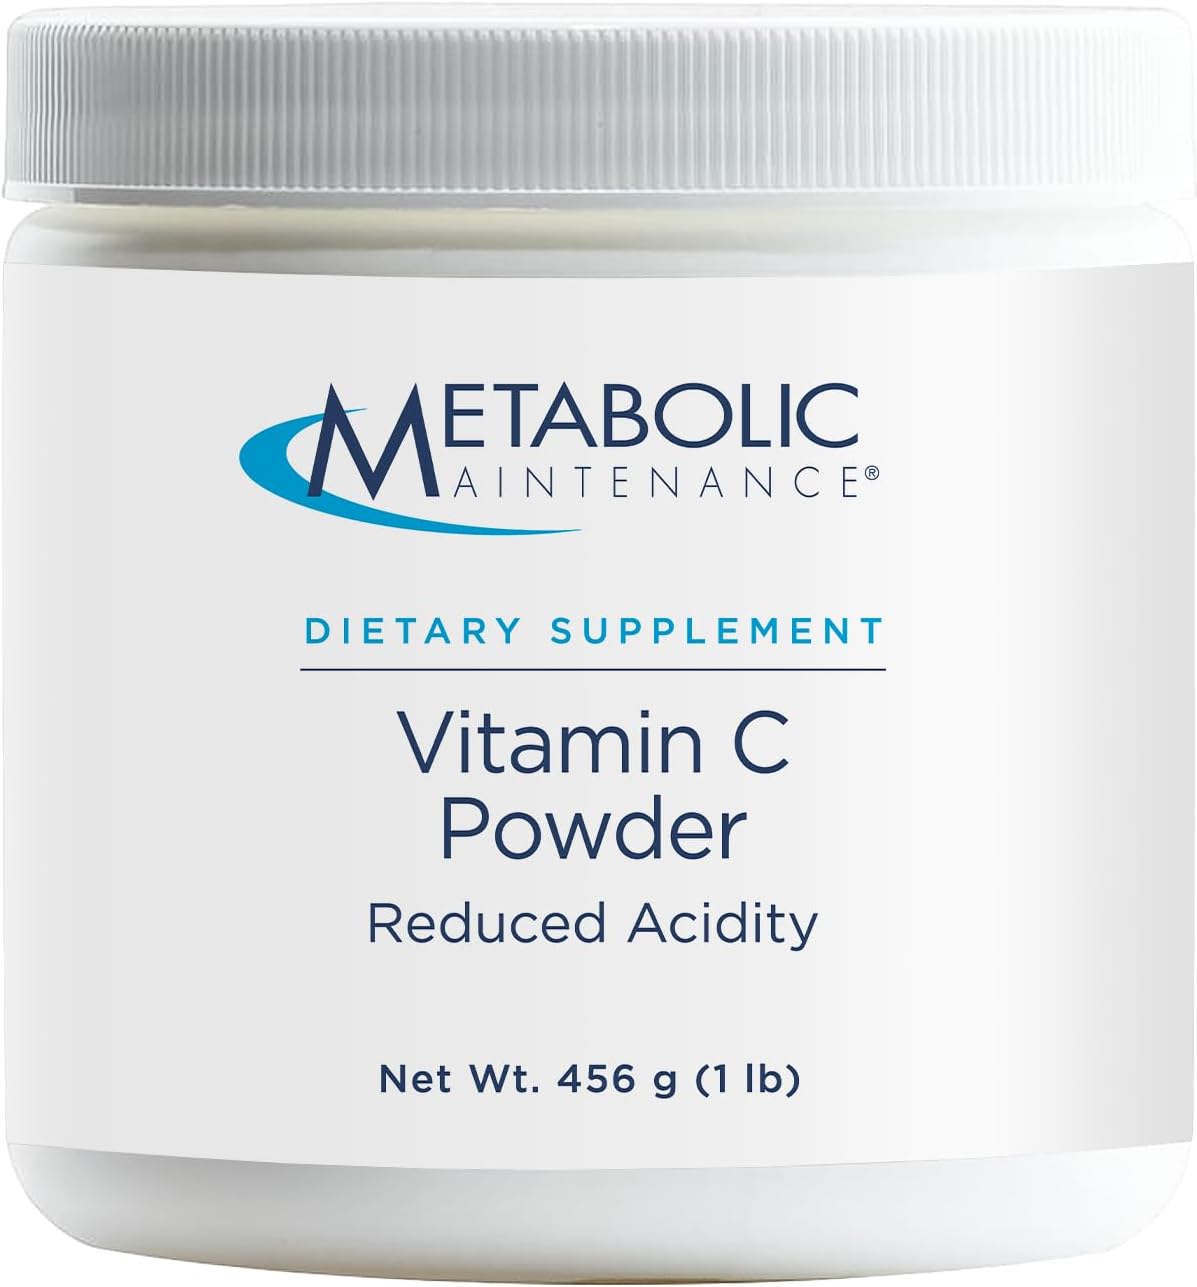 Metabolic Maintenance Pure Vitamin C Powder - 1100 mg Premium Ascorbic Acid & Sodium Ascorbate Antioxidant Supplement for Immune Support & Adrenal Health - Gluten-Free (1 lb / 456g)